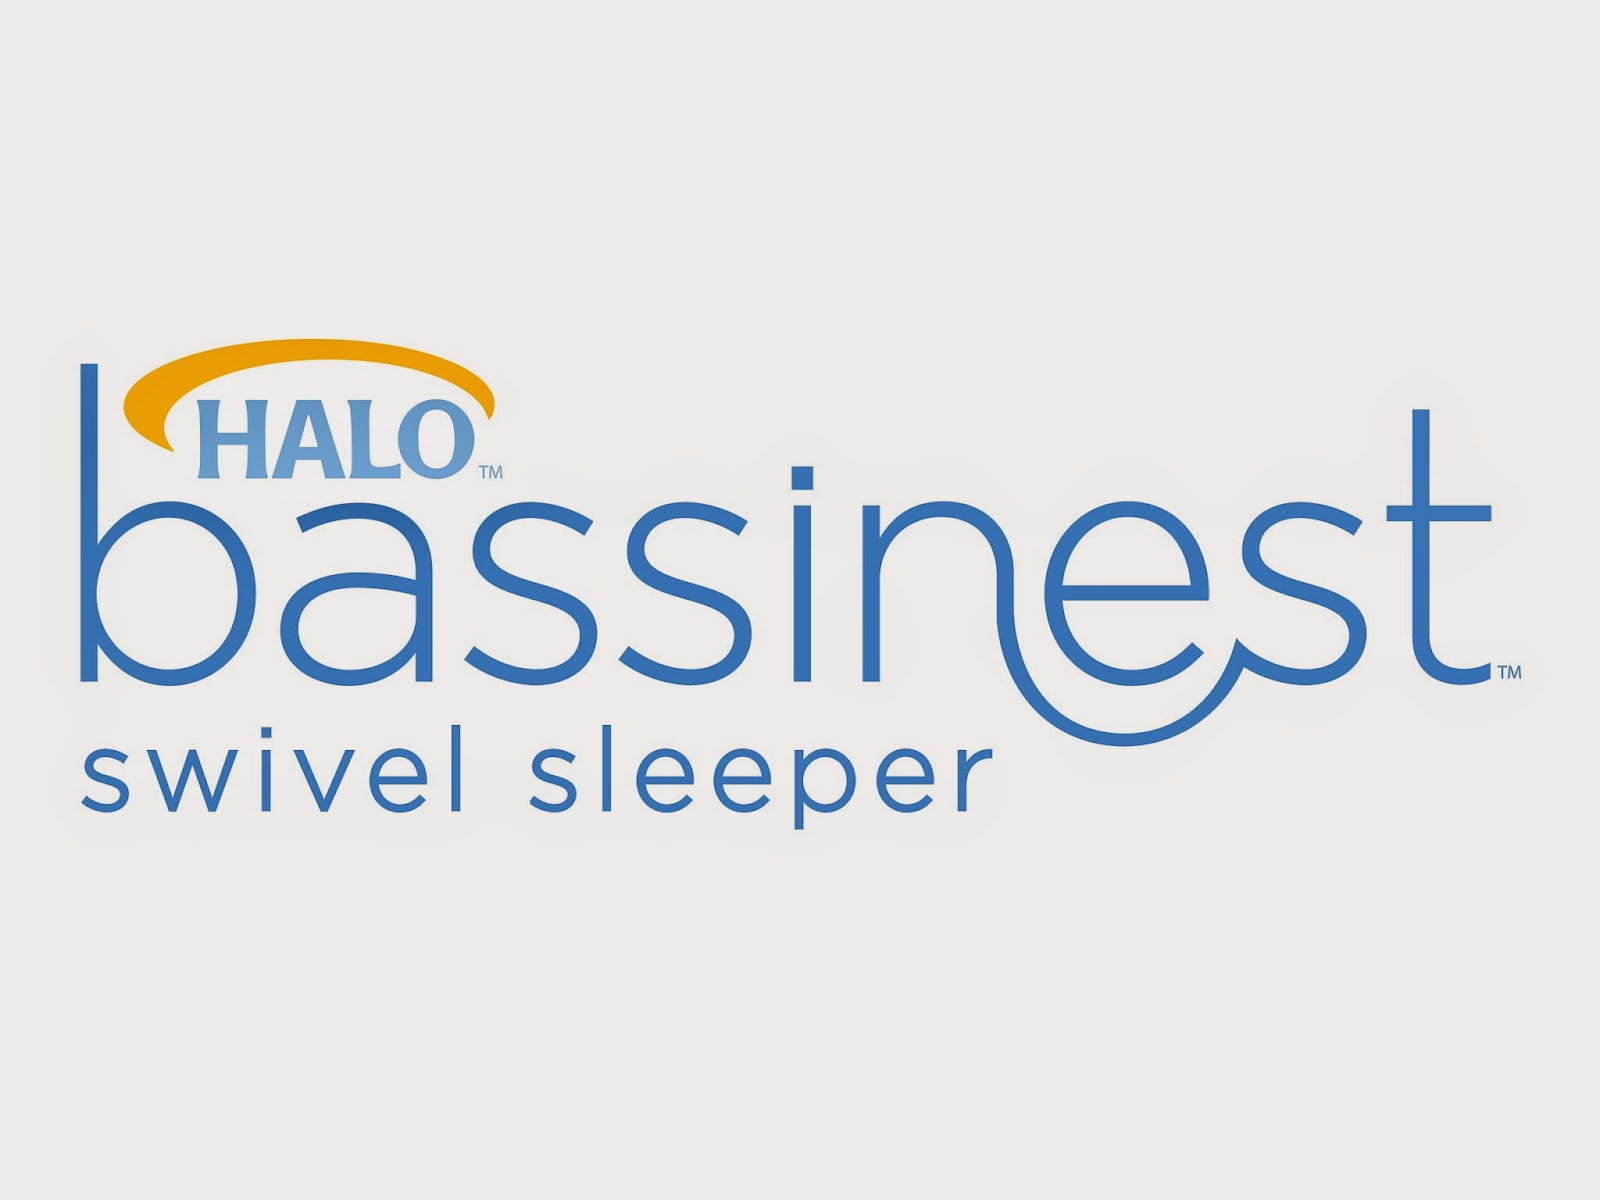 Halo Swivel Sleeper a new generation of bassinets. 